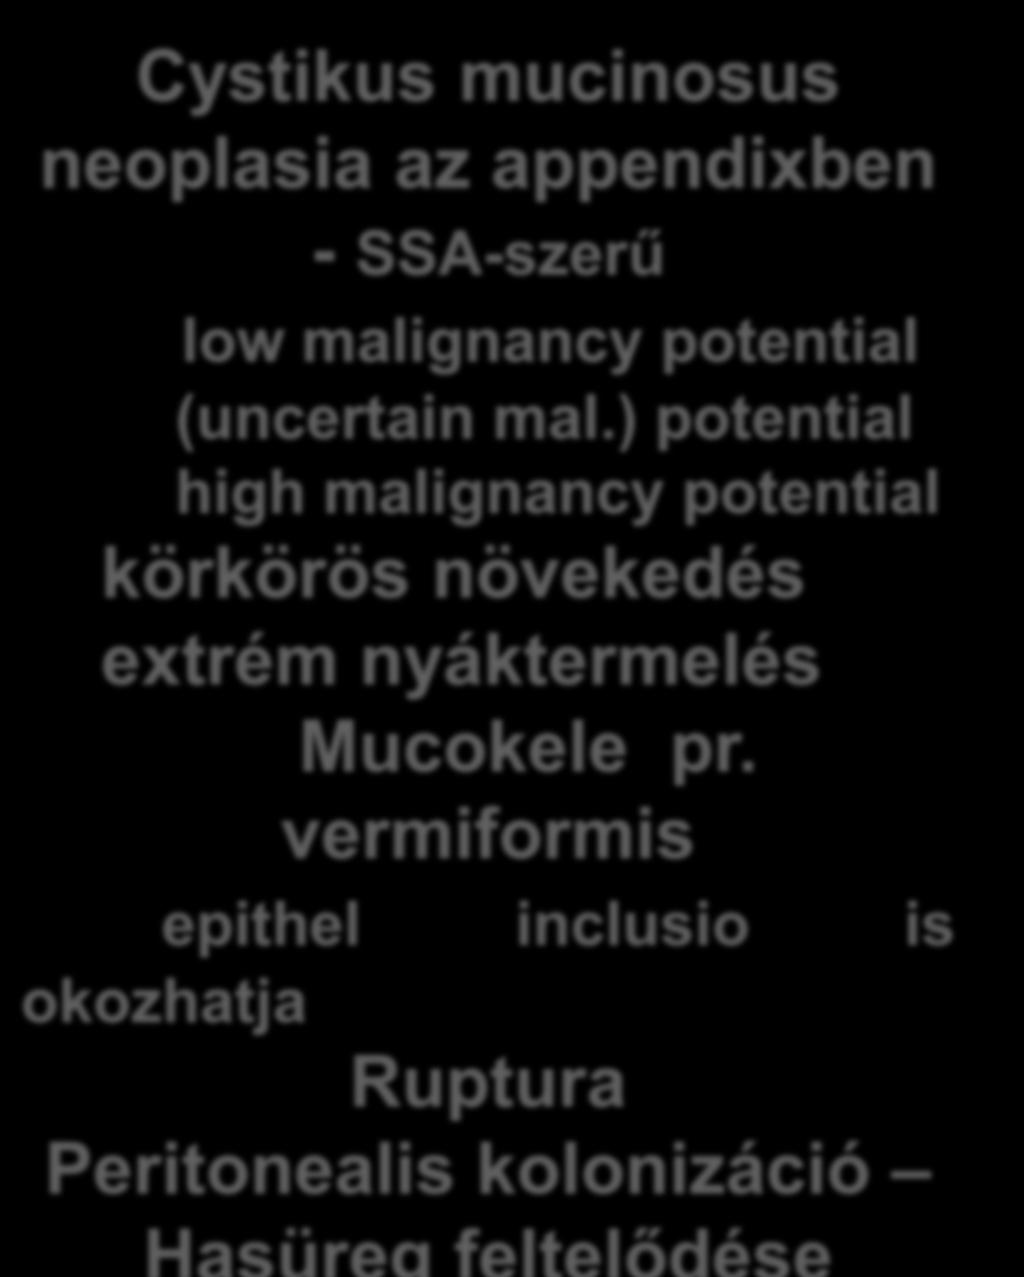 Pseudomyxoma peritonei Cystikus mucinosus neoplasia az appendixben - SSA-szerű low malignancy potential (uncertain mal.